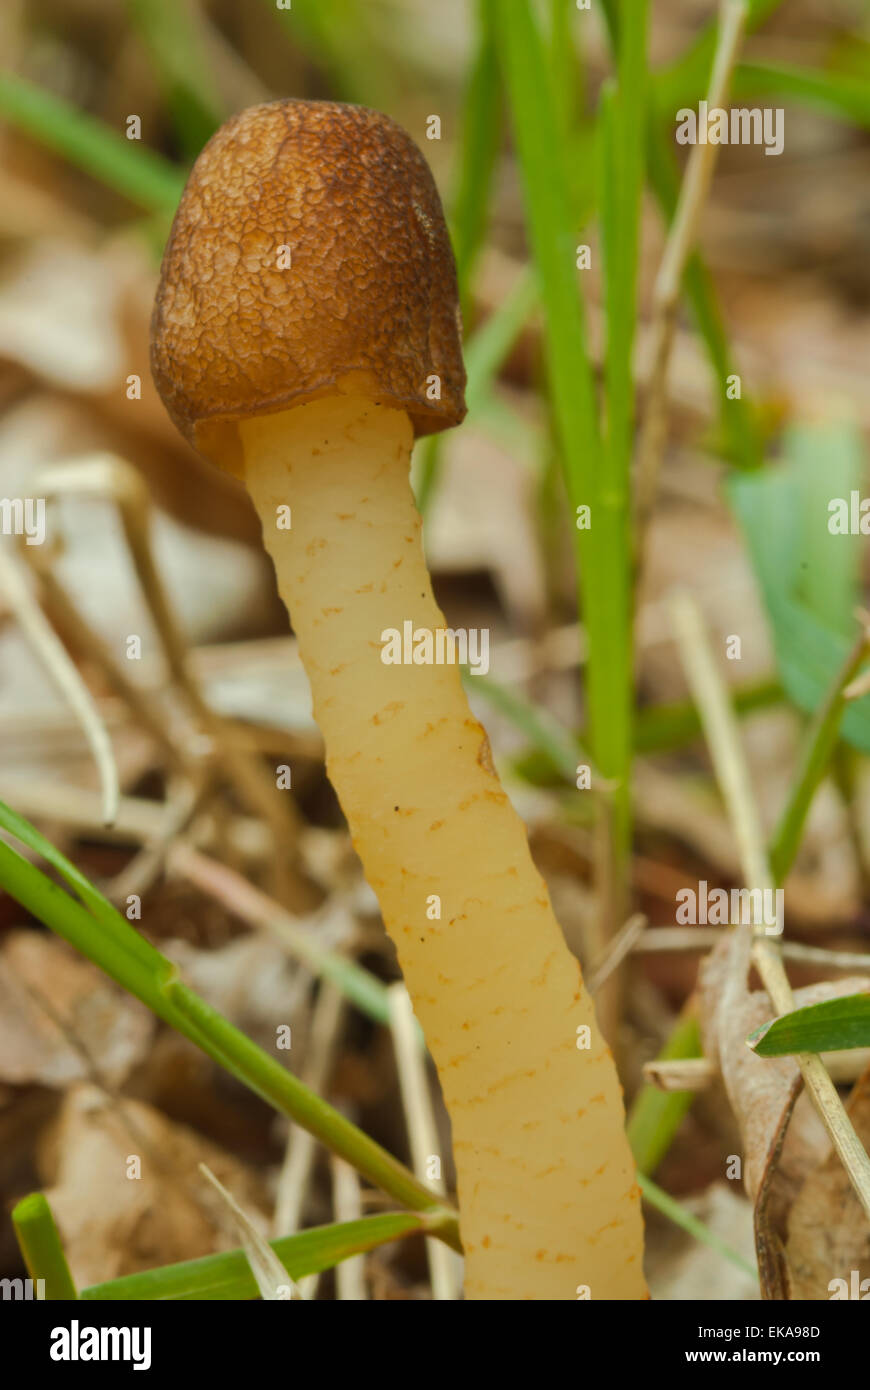 Thimble fungus, Verpa conica, growing in the springtime grass, Frontenac Provincial Park, Ontario Stock Photo